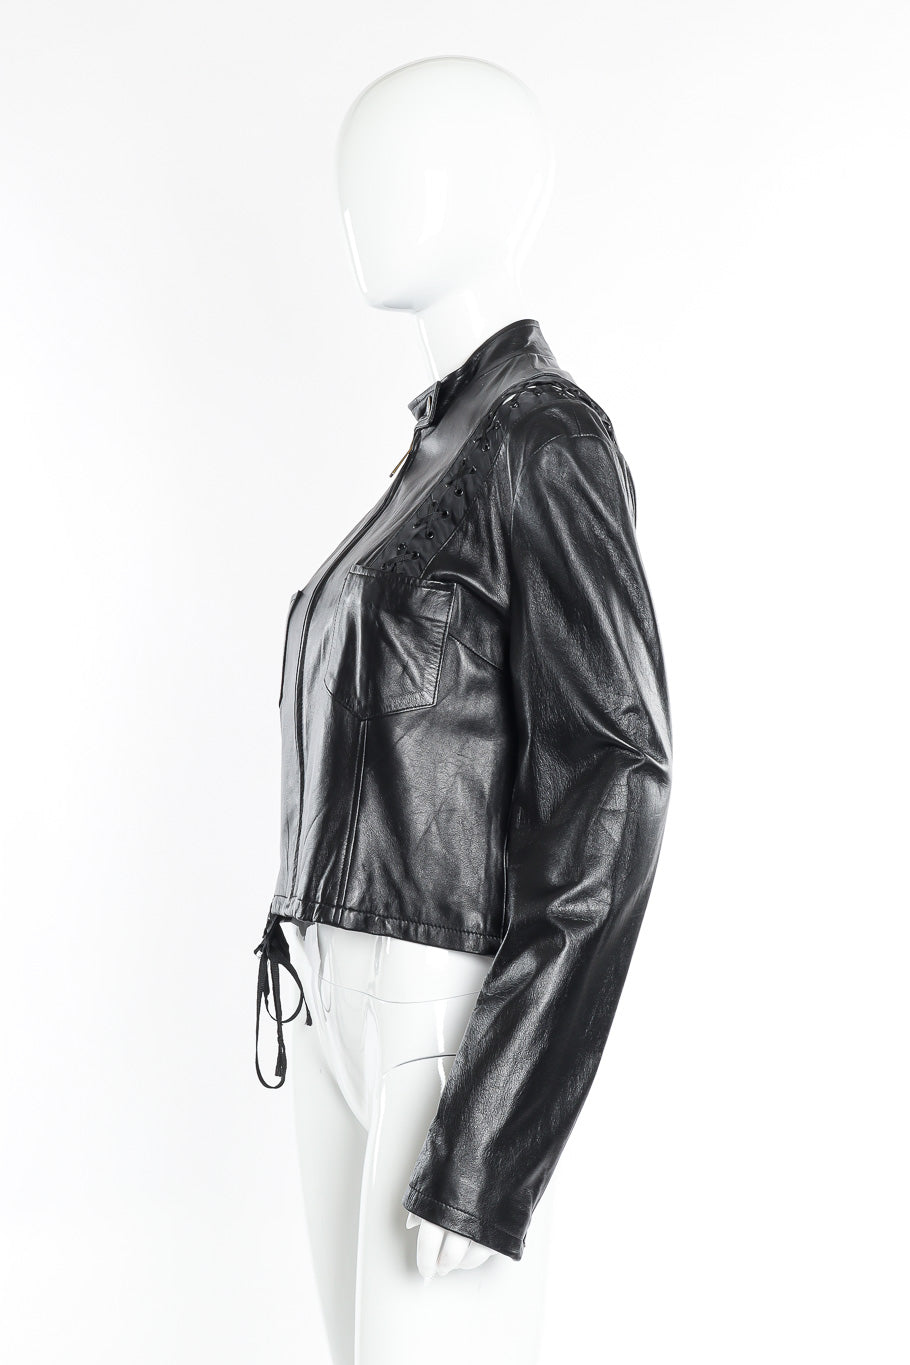 Dolce & Gabbana leather panther jacket on mannequin @recessla